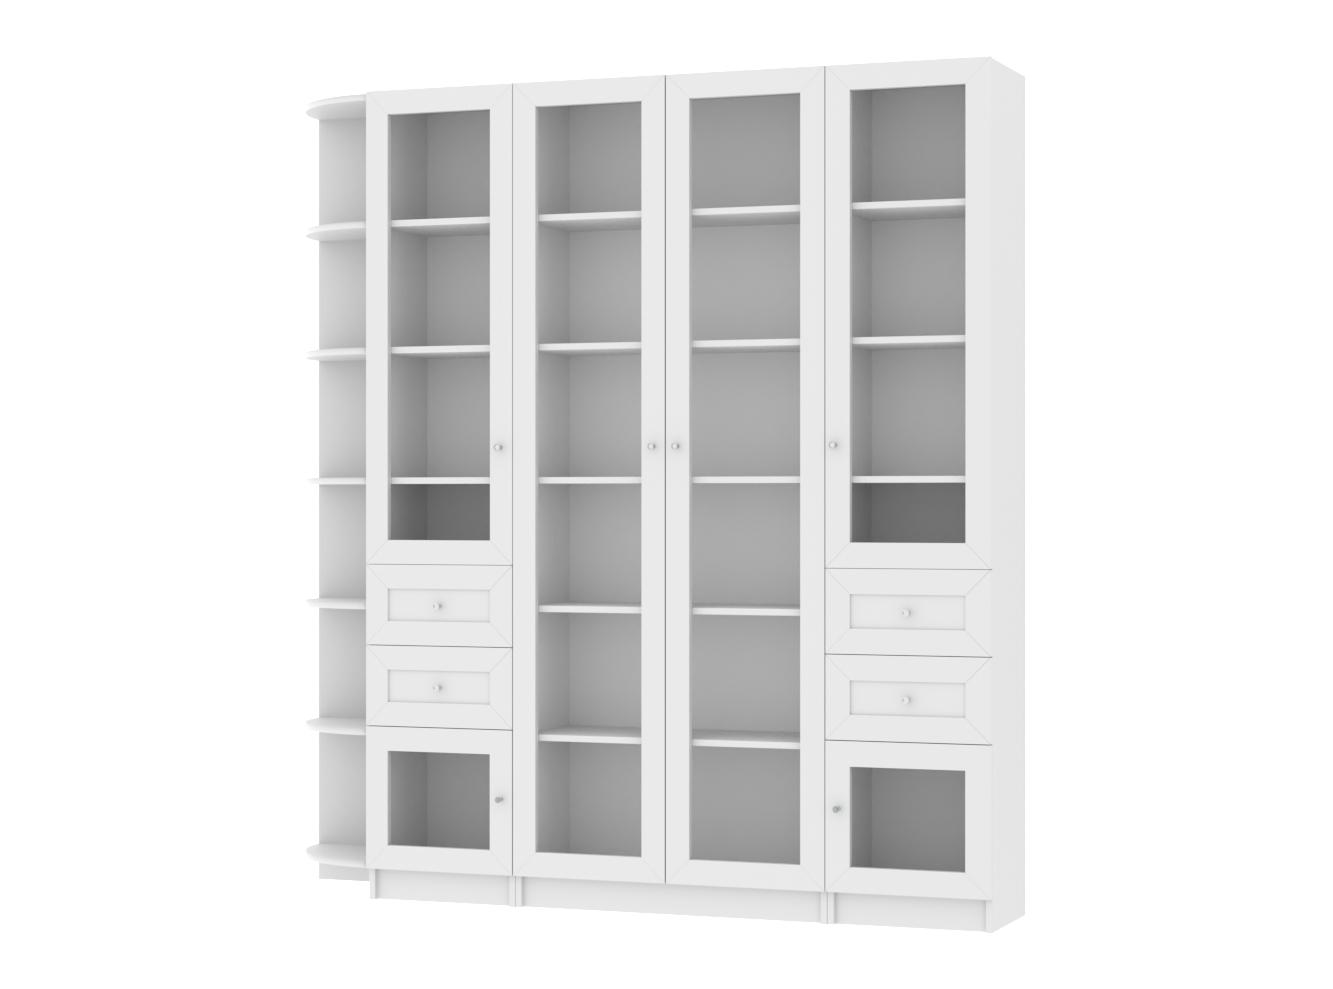  Книжный шкаф Билли 366 white ИКЕА (IKEA) изображение товара